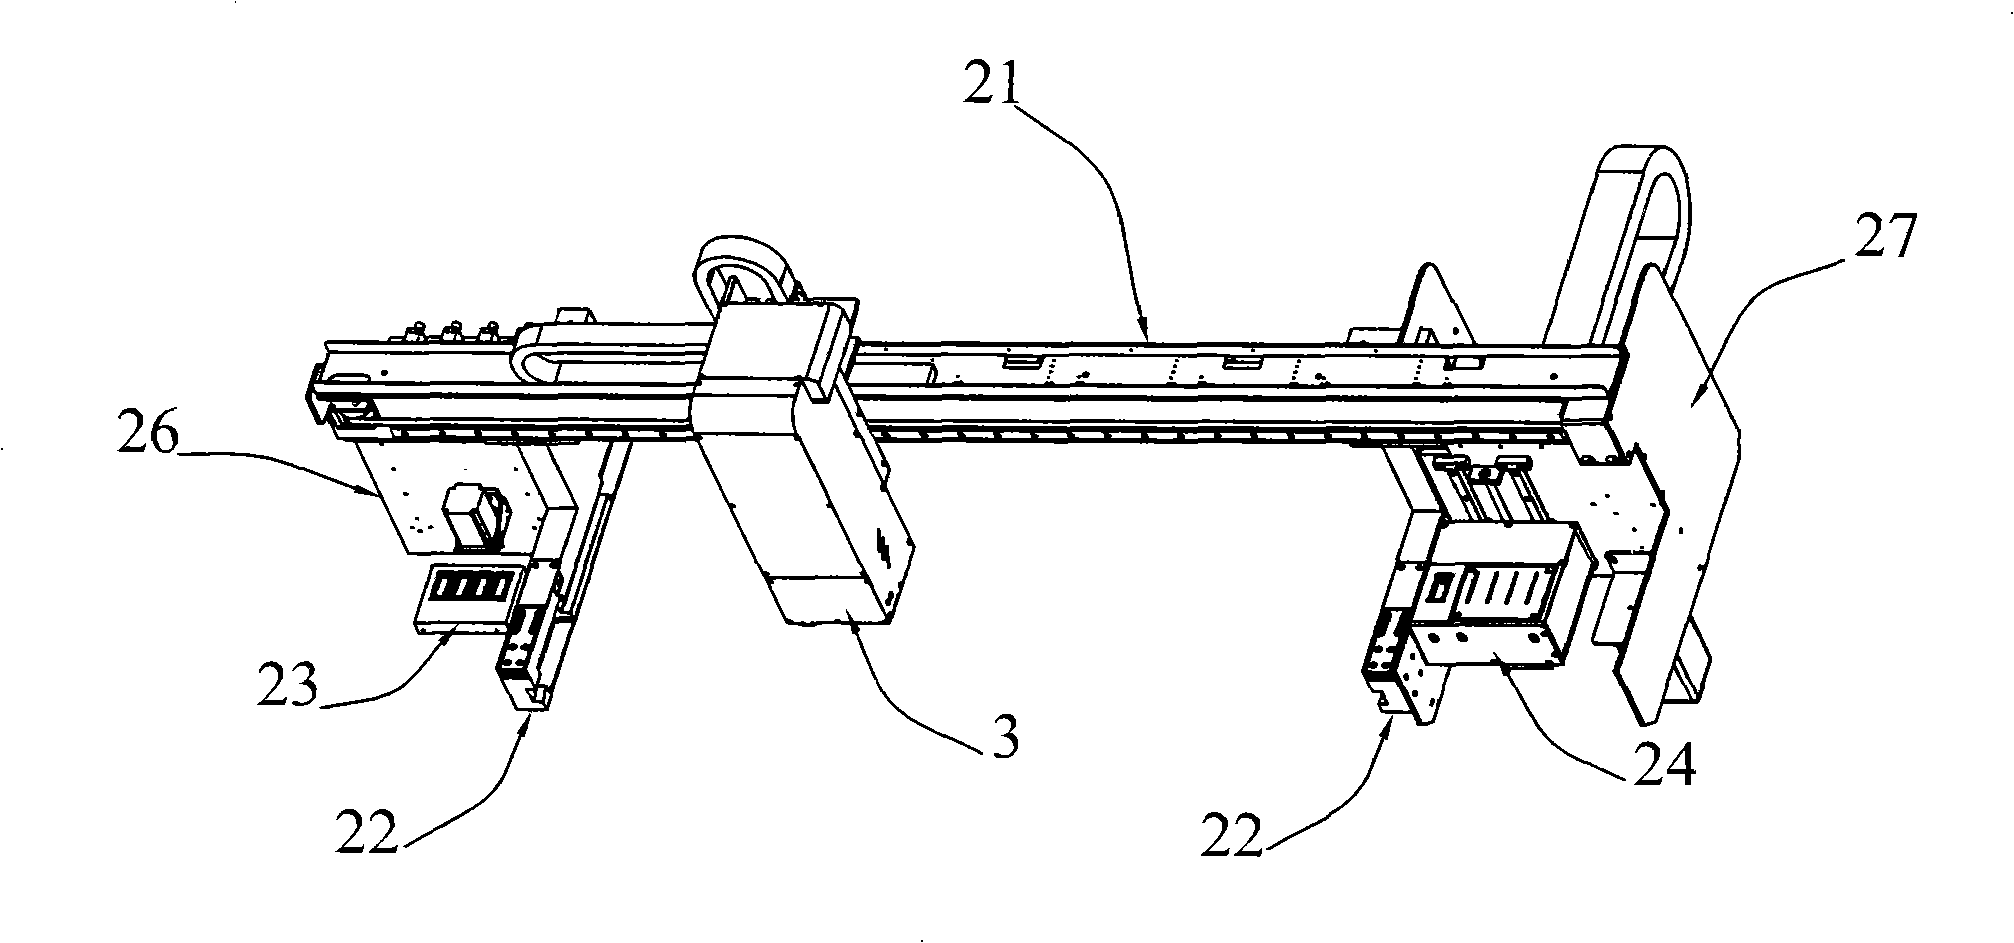 Print mechanism of flat-panel printer